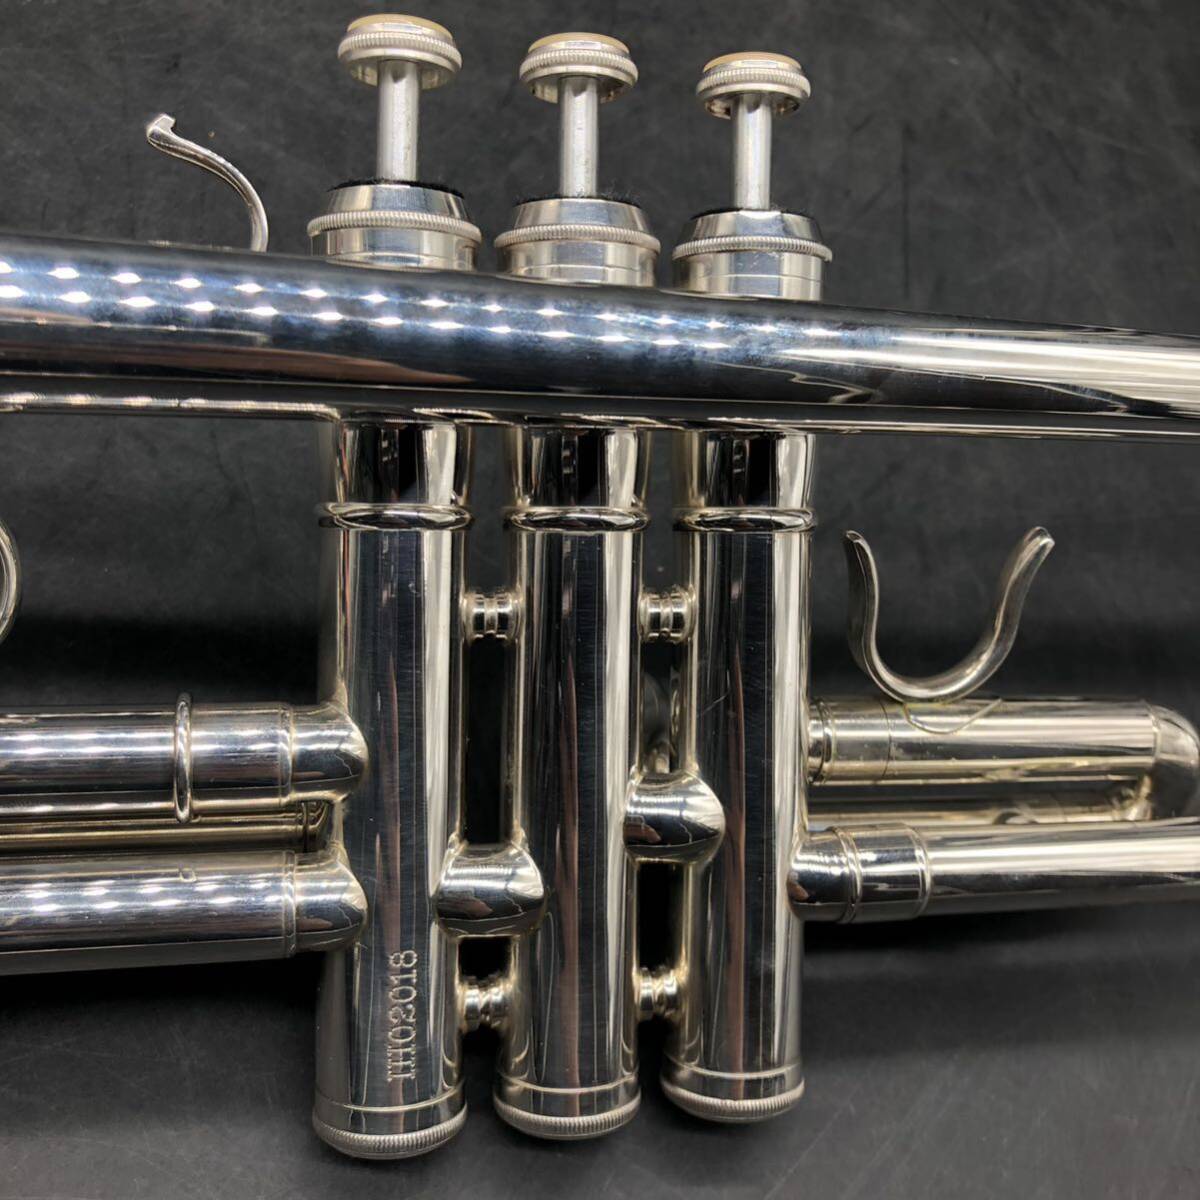 438 Heinrich トランペット IH02018 管楽器 金管楽器 吹奏楽器 音楽 演奏 ケース付 ハードケース付_画像7